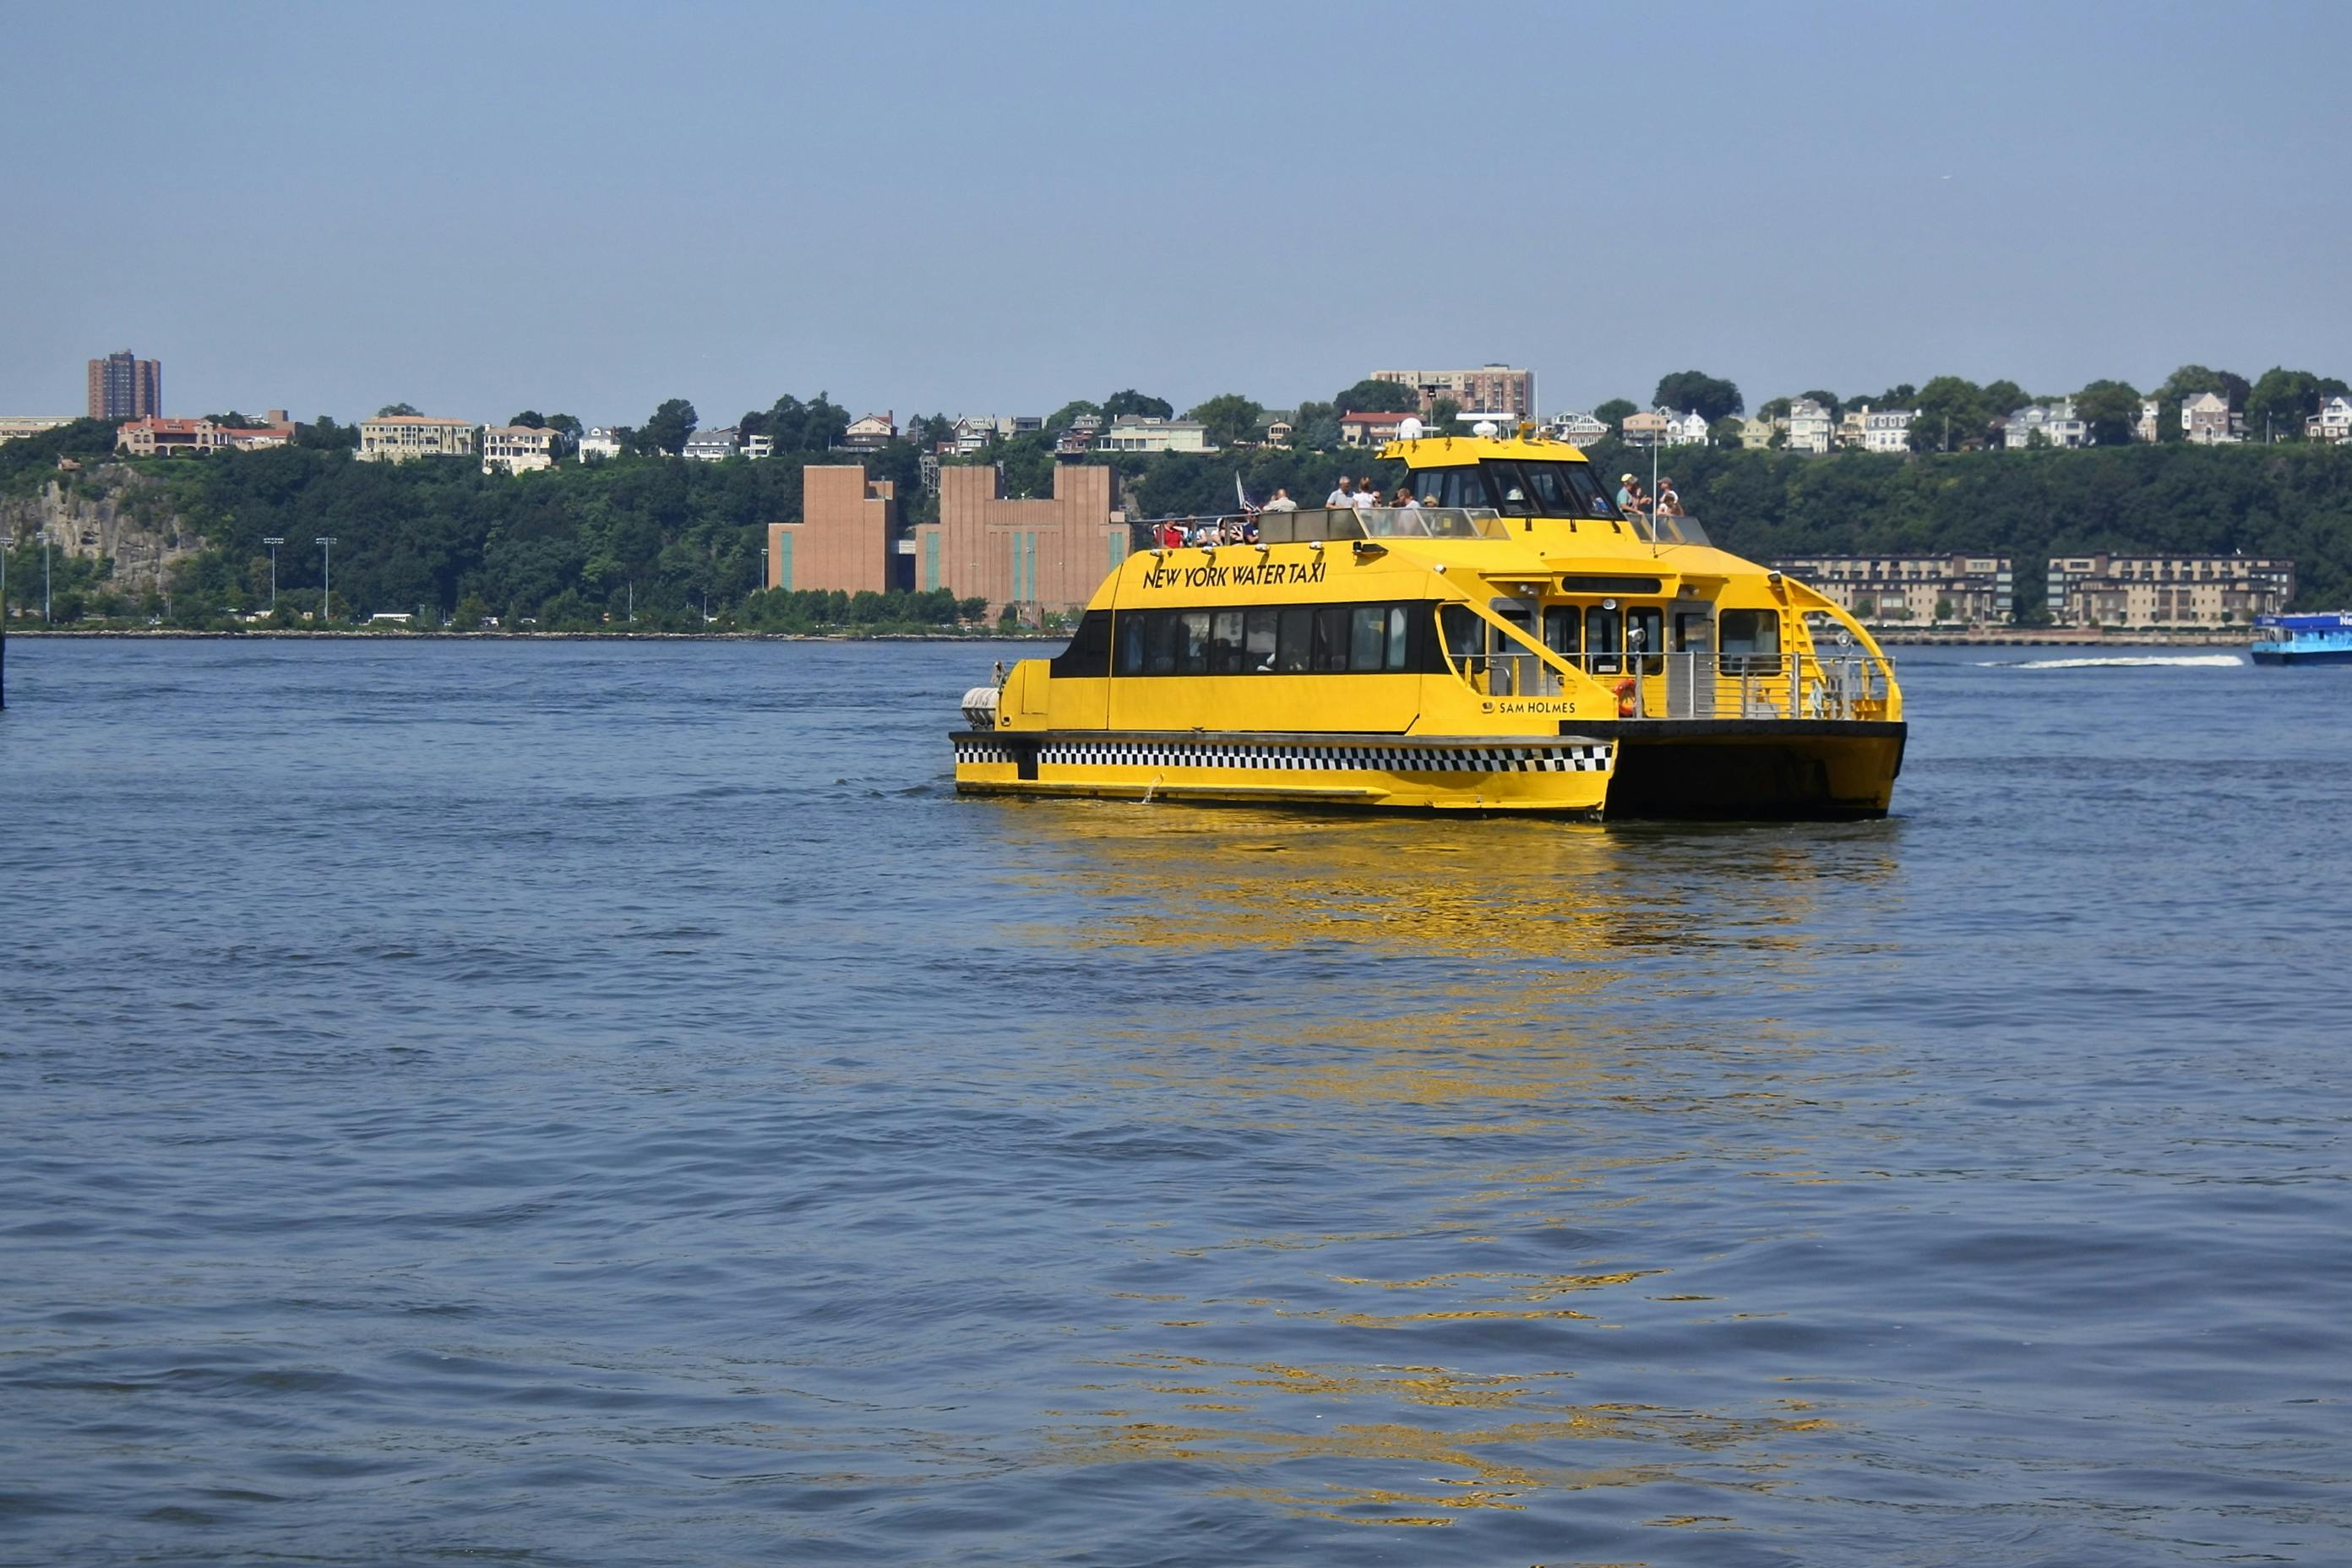 Free stock photo of NY water taxi